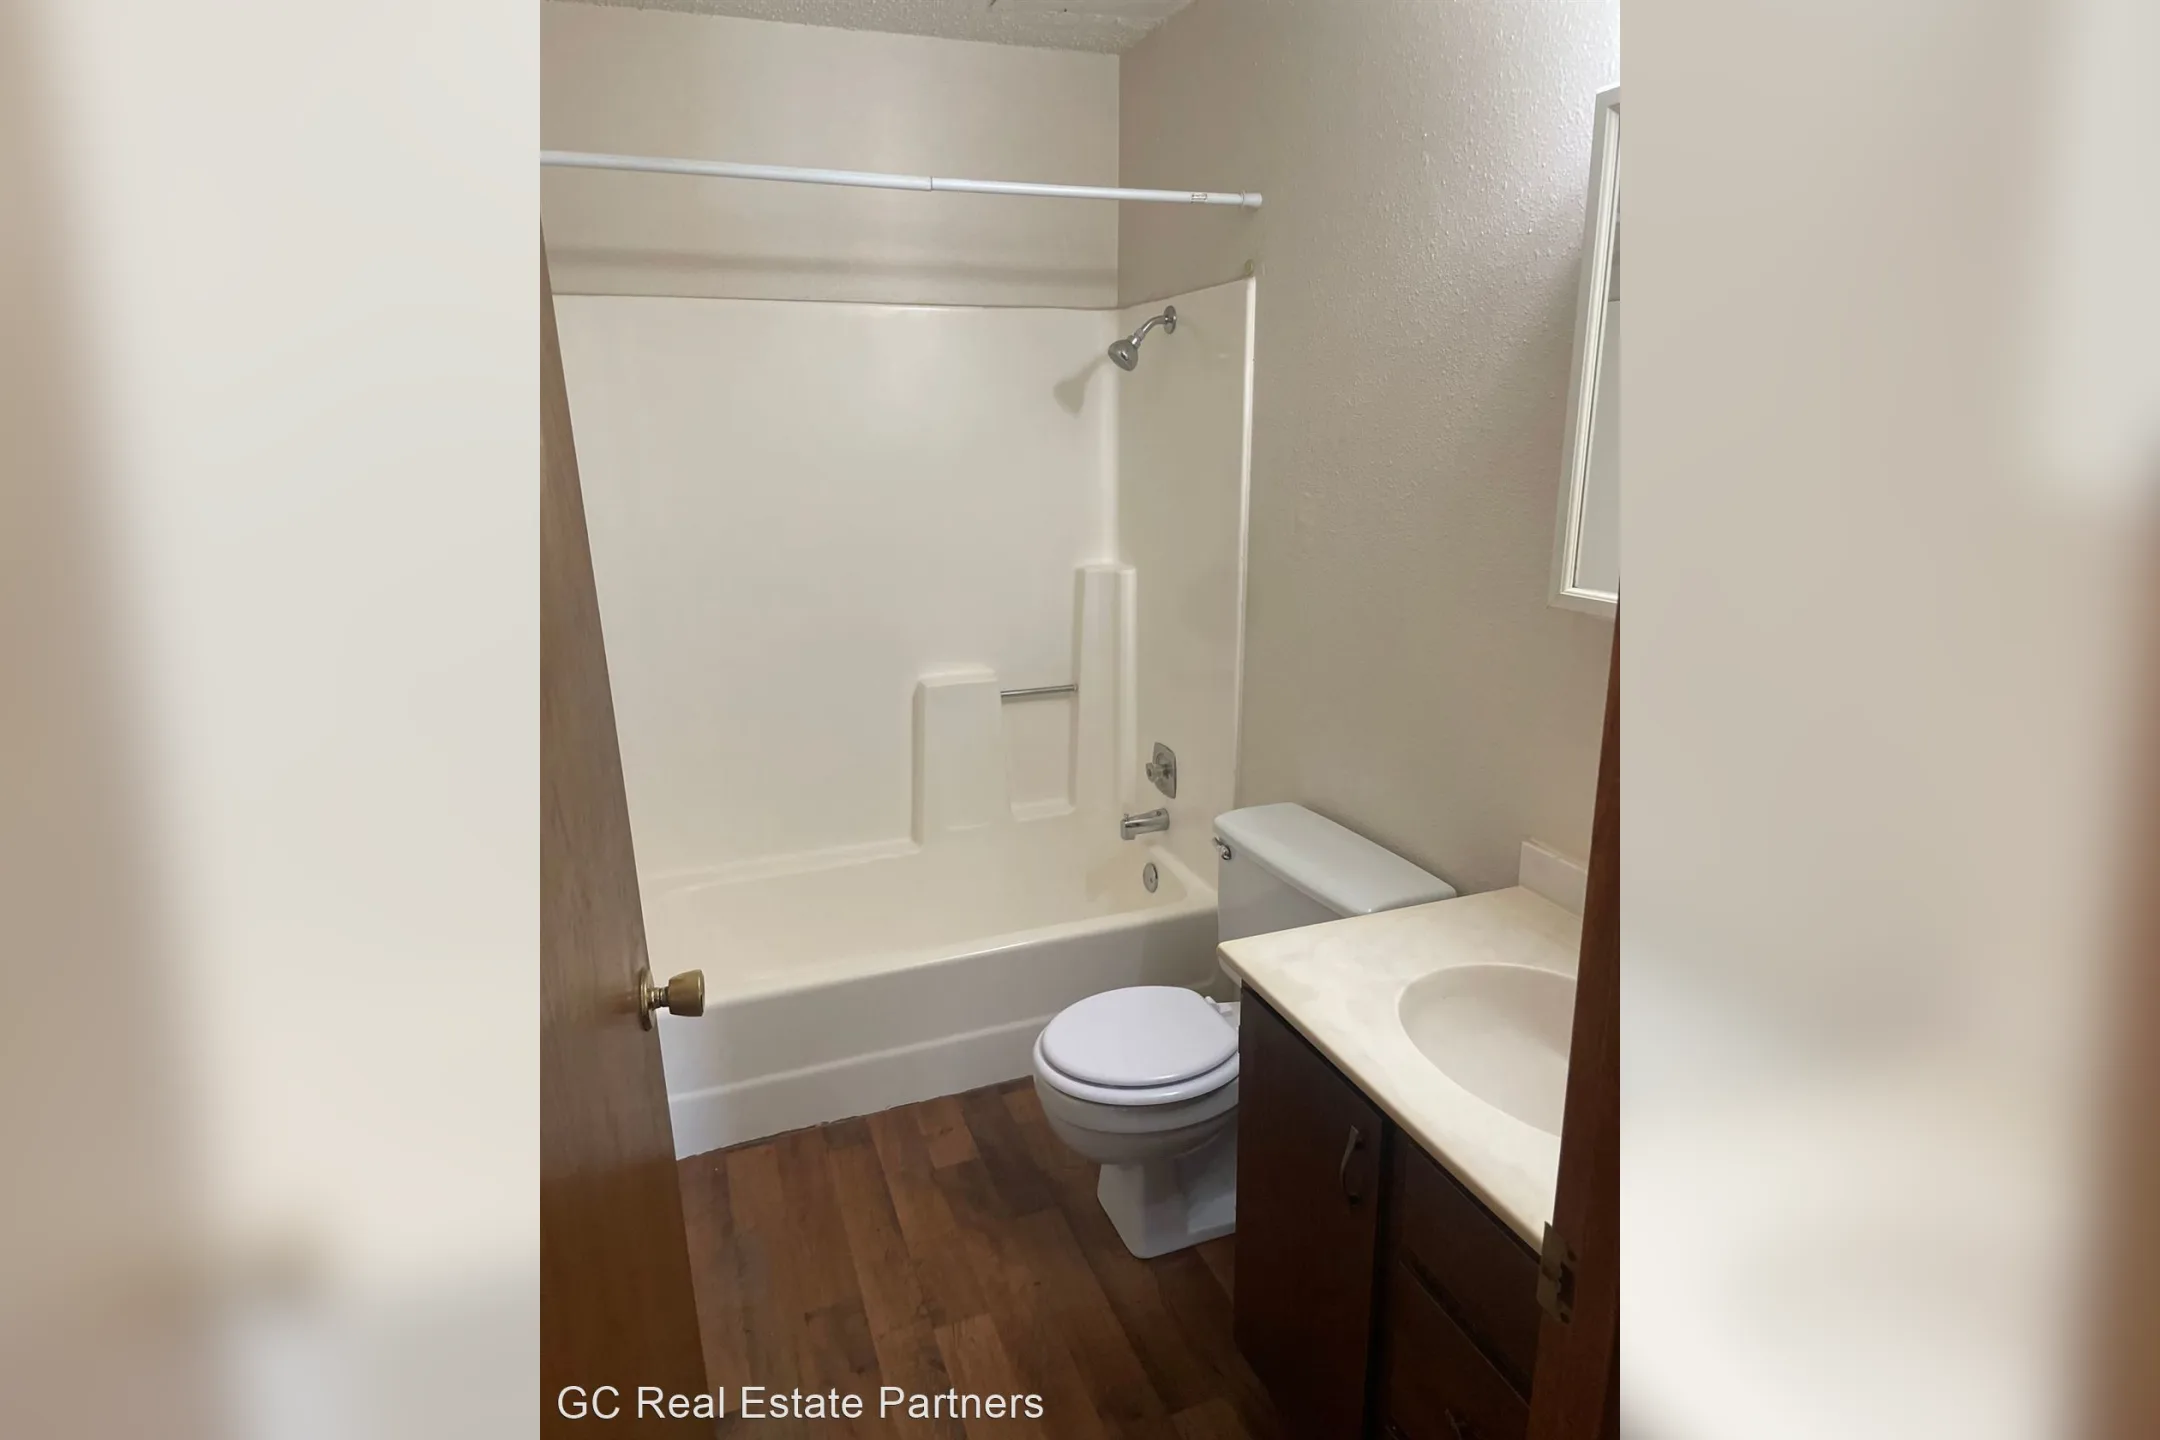 Bathroom - City Walk Apartments - Dickinson, ND